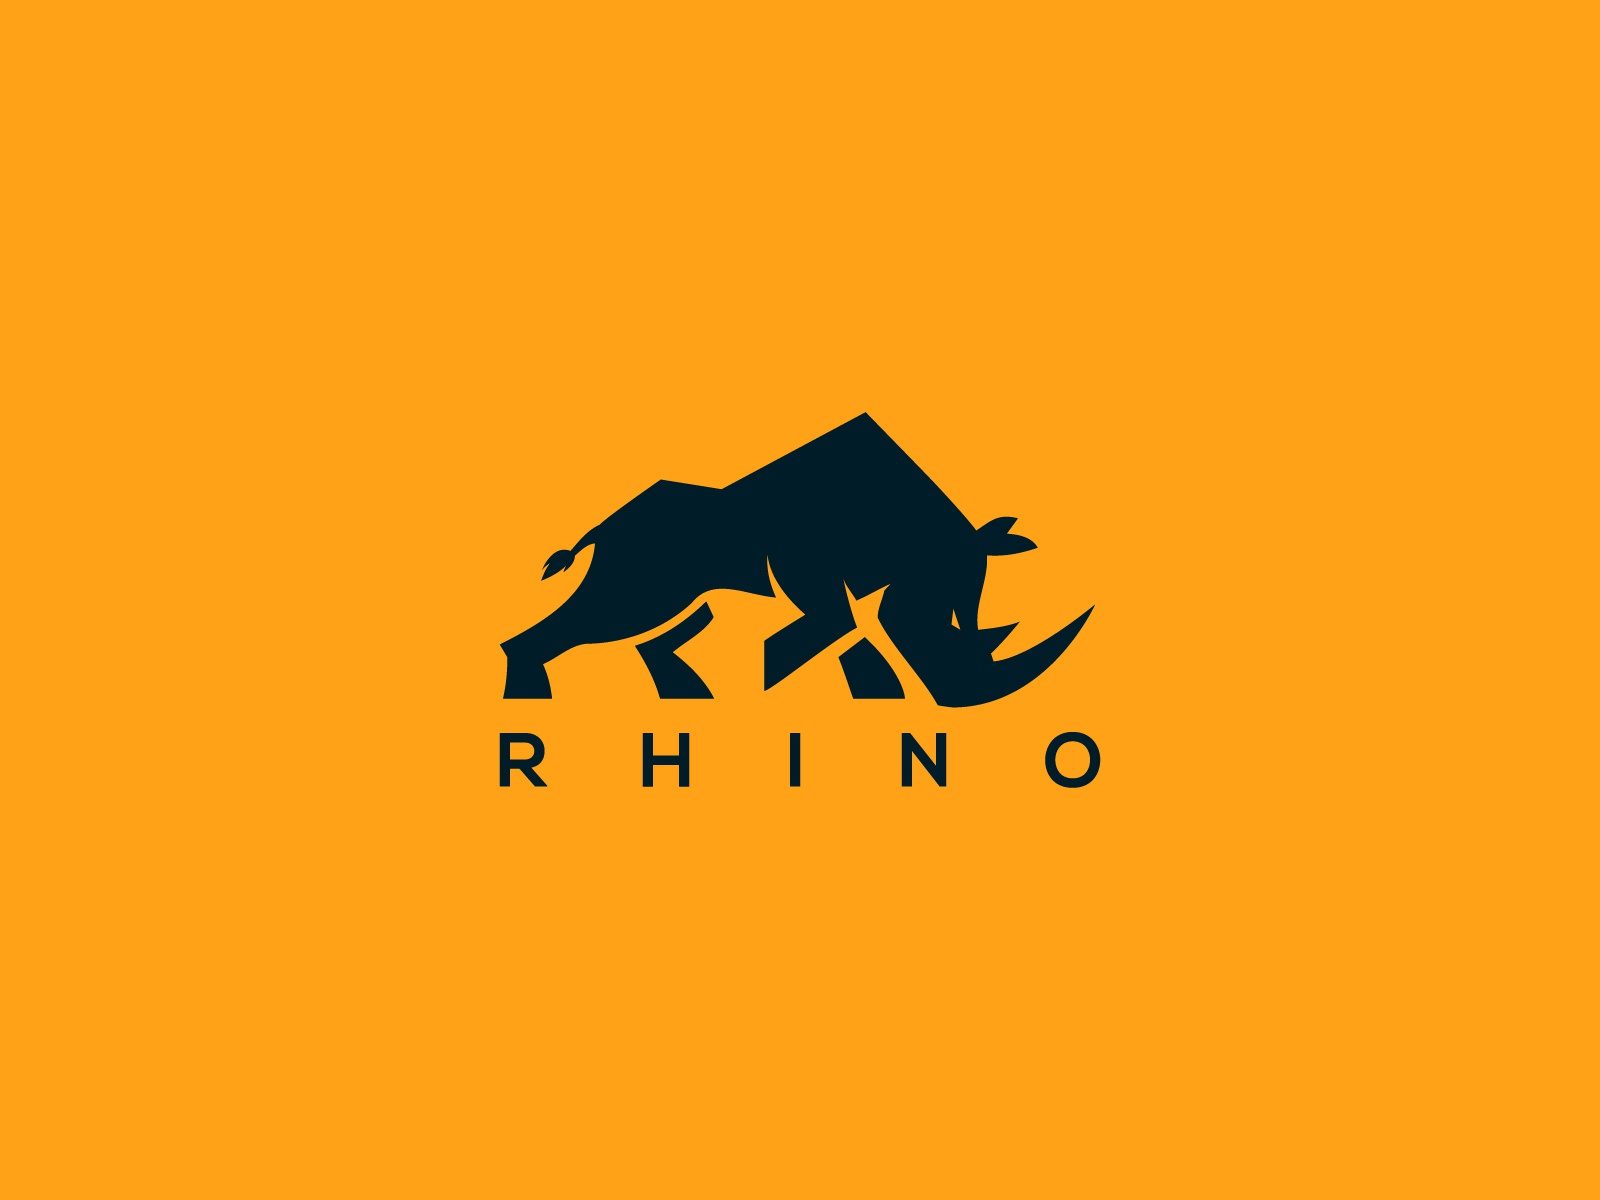 rhino cracked version